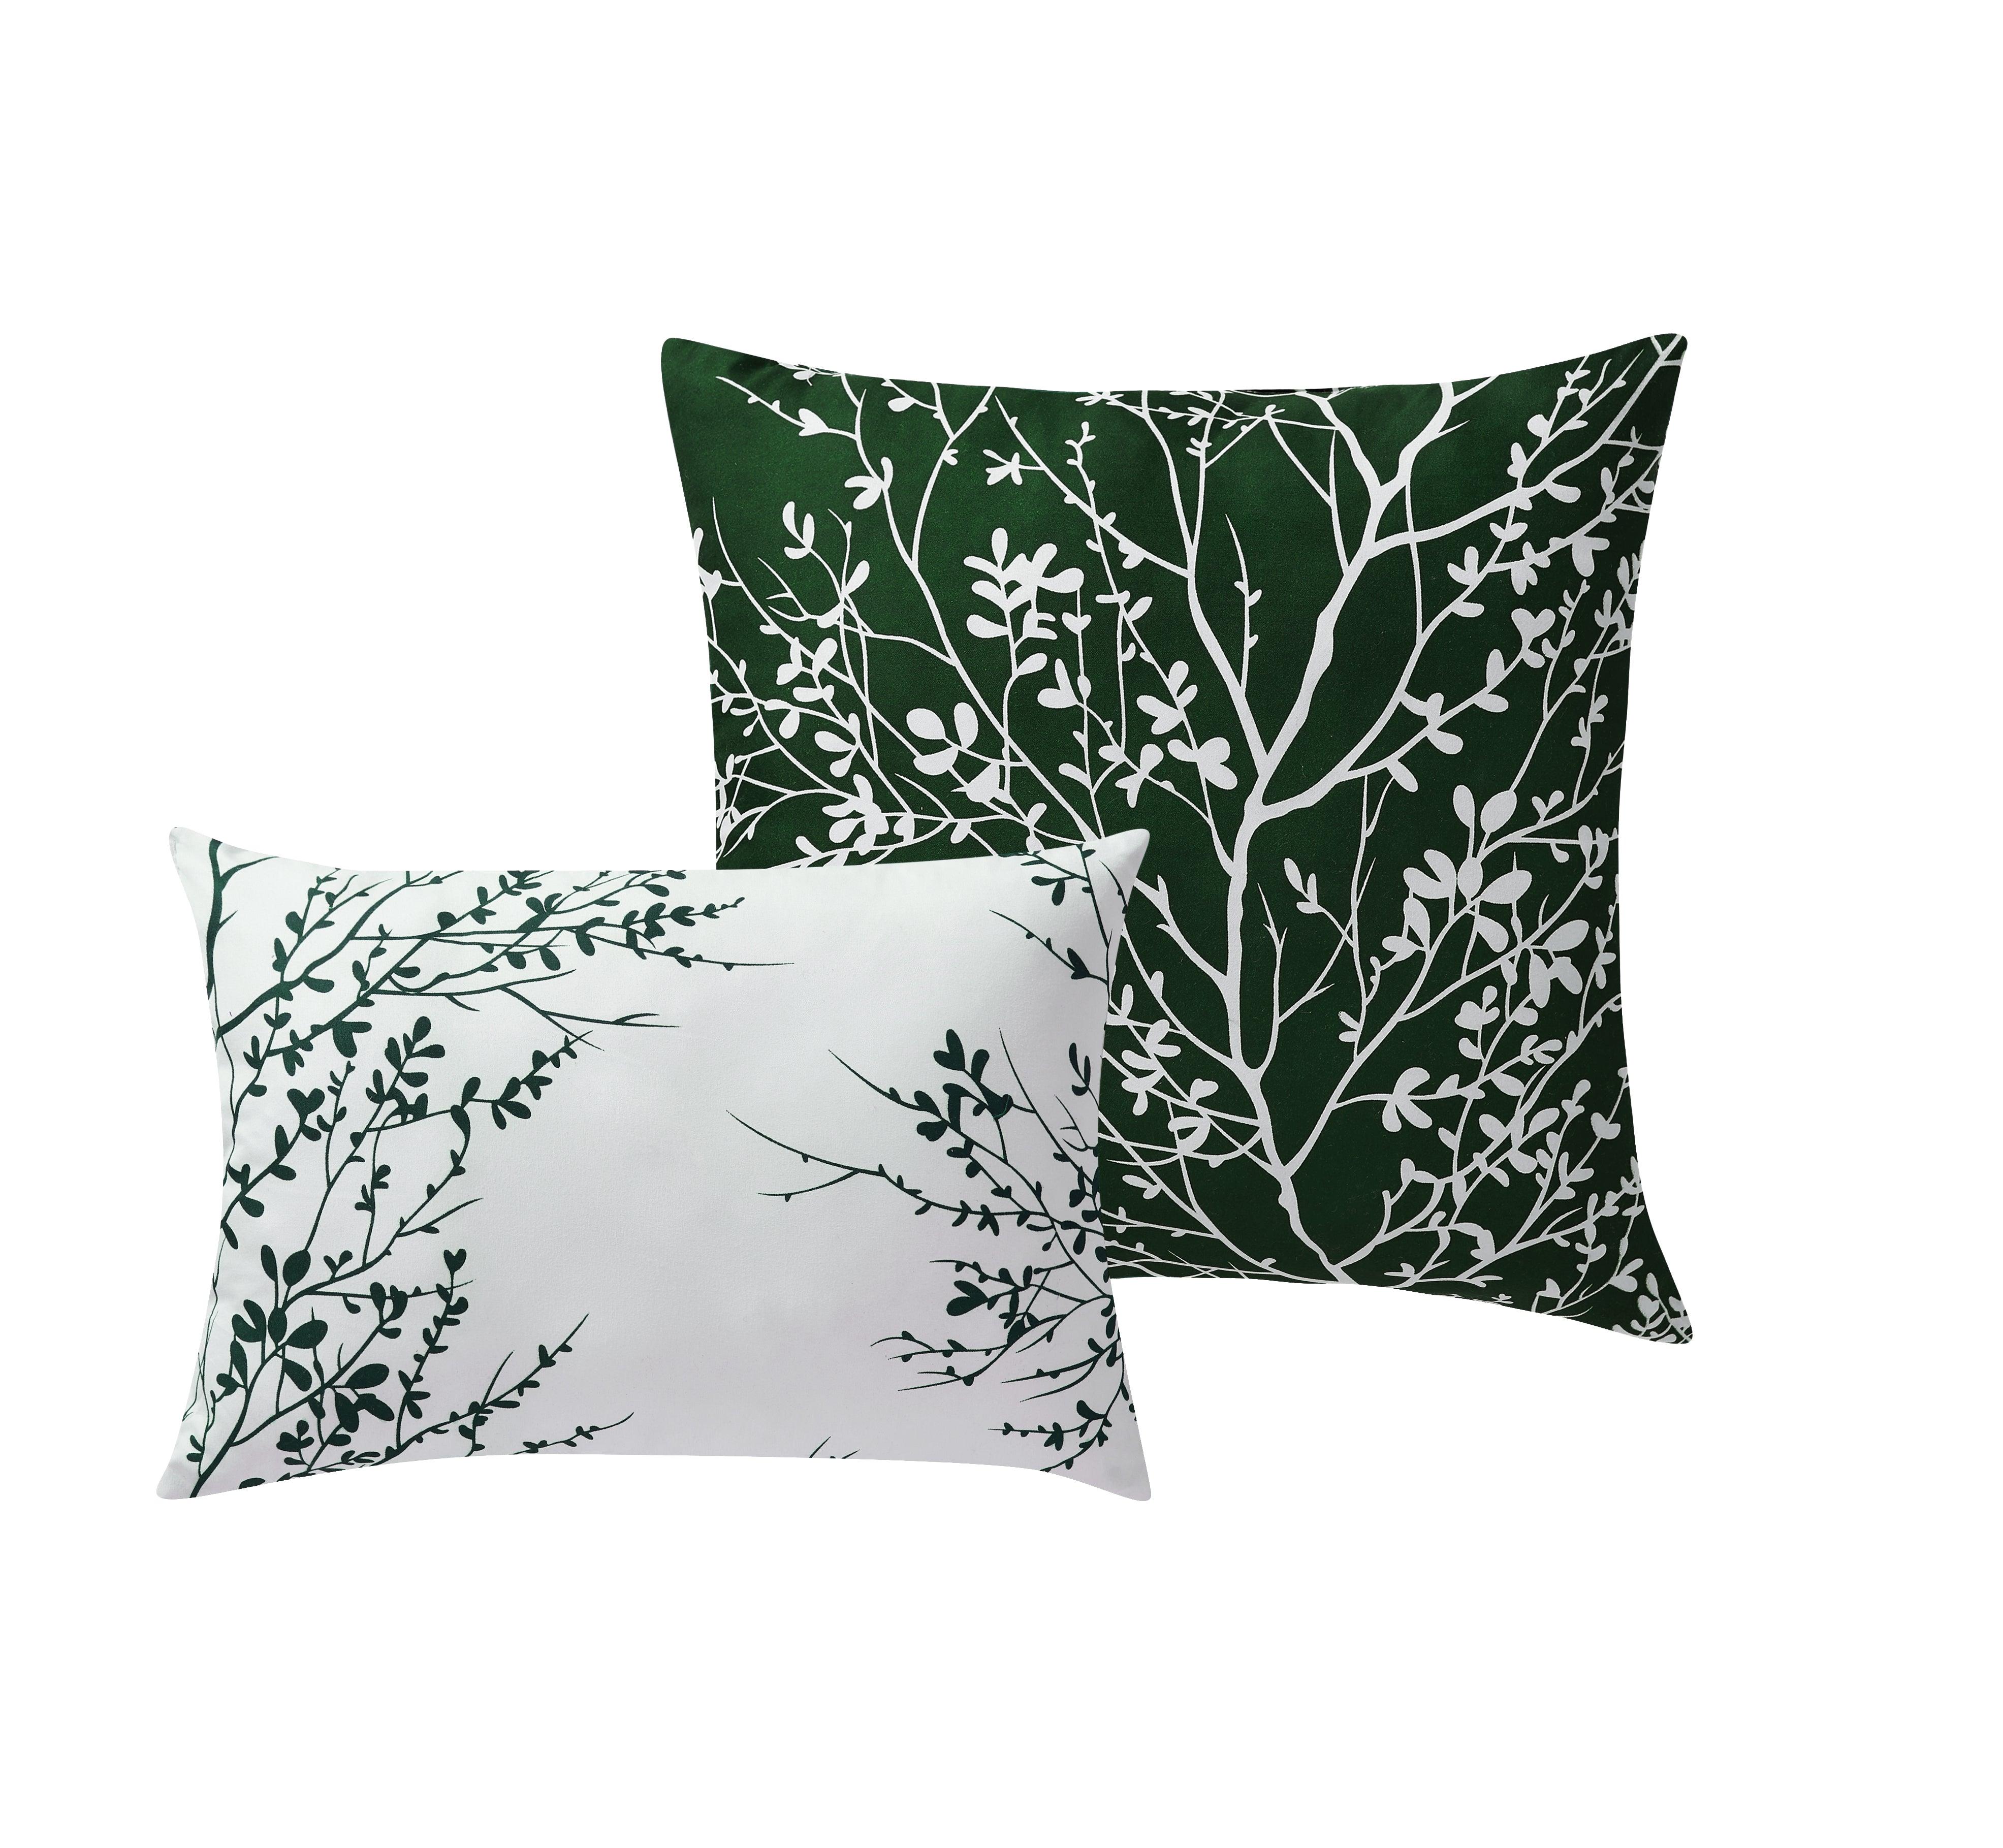 Foliage Reversible Comforter Set + Two Free Sham Pillows - Spirit Linen - Hunter